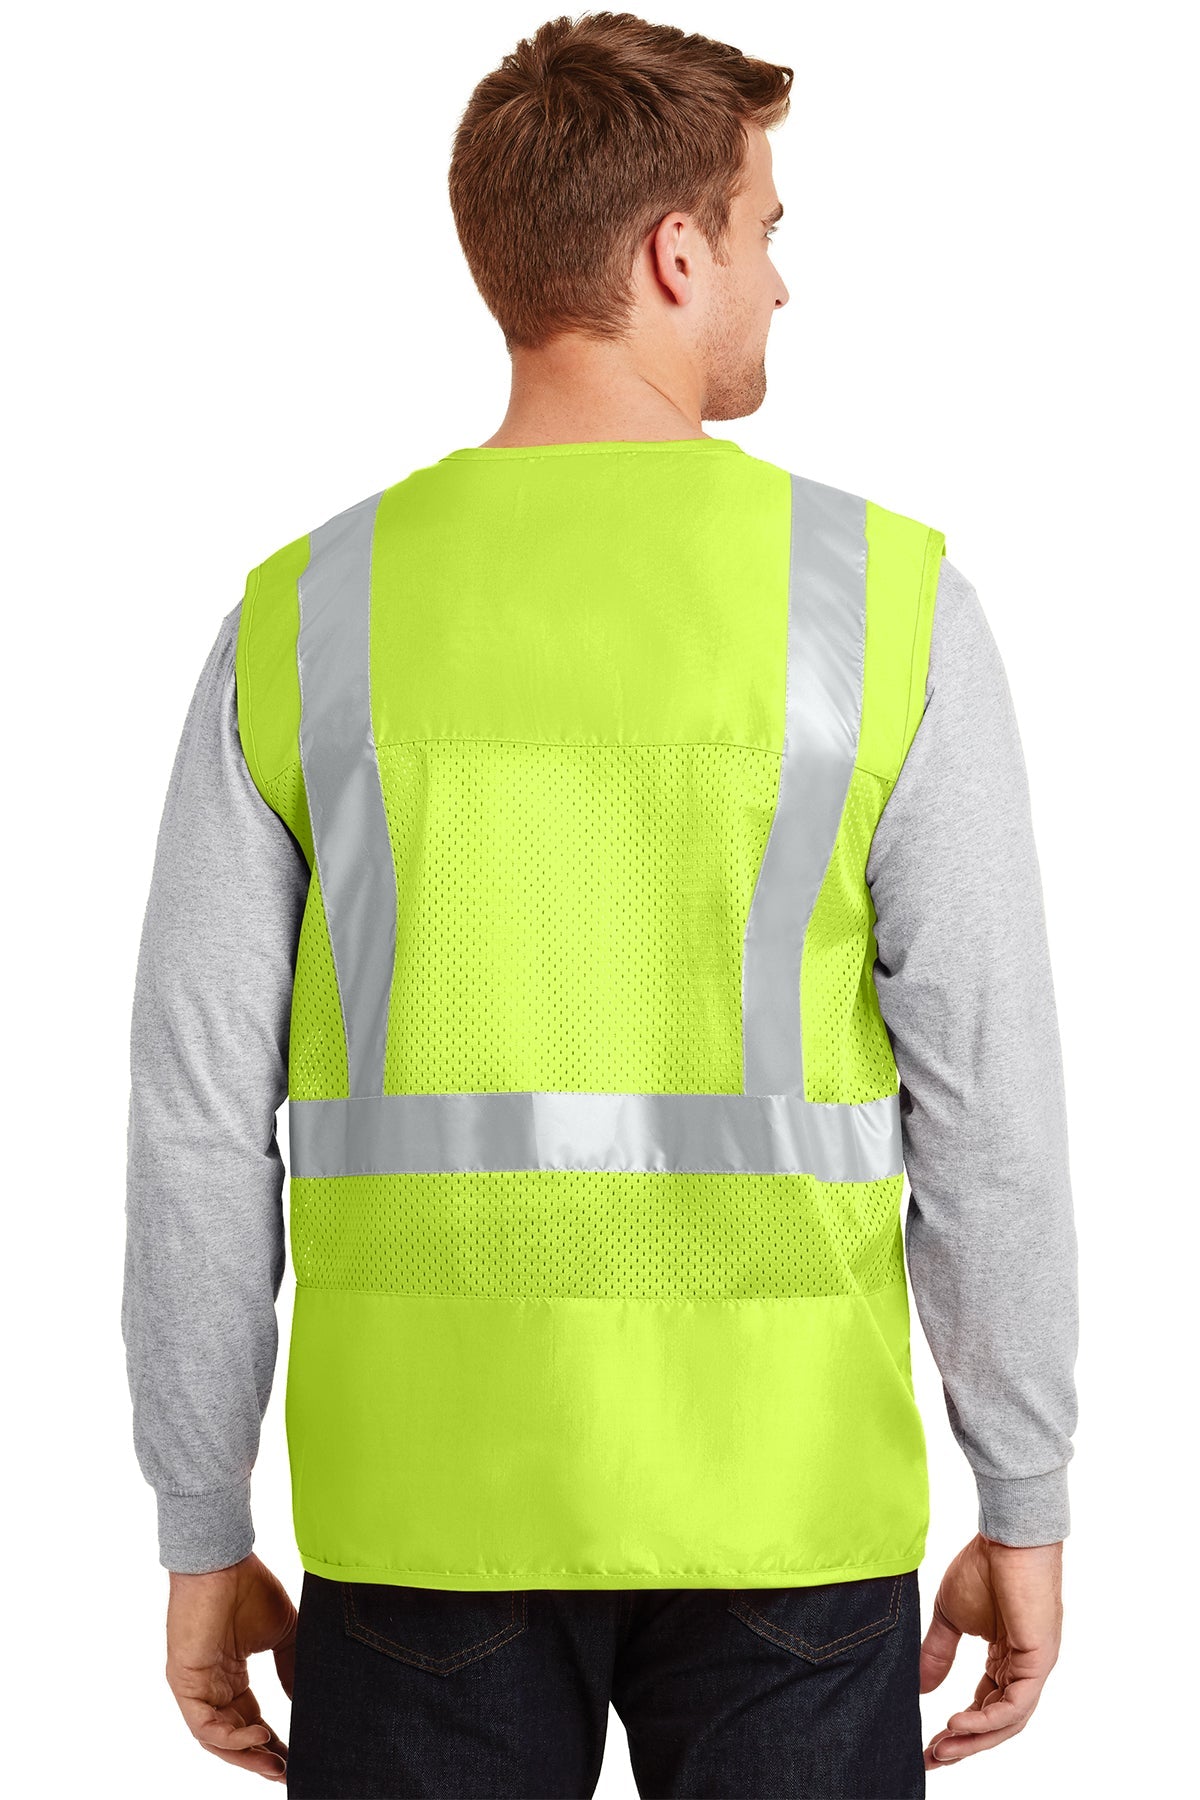 cornerstone_csv405 _safety yellow_company_logo_jackets